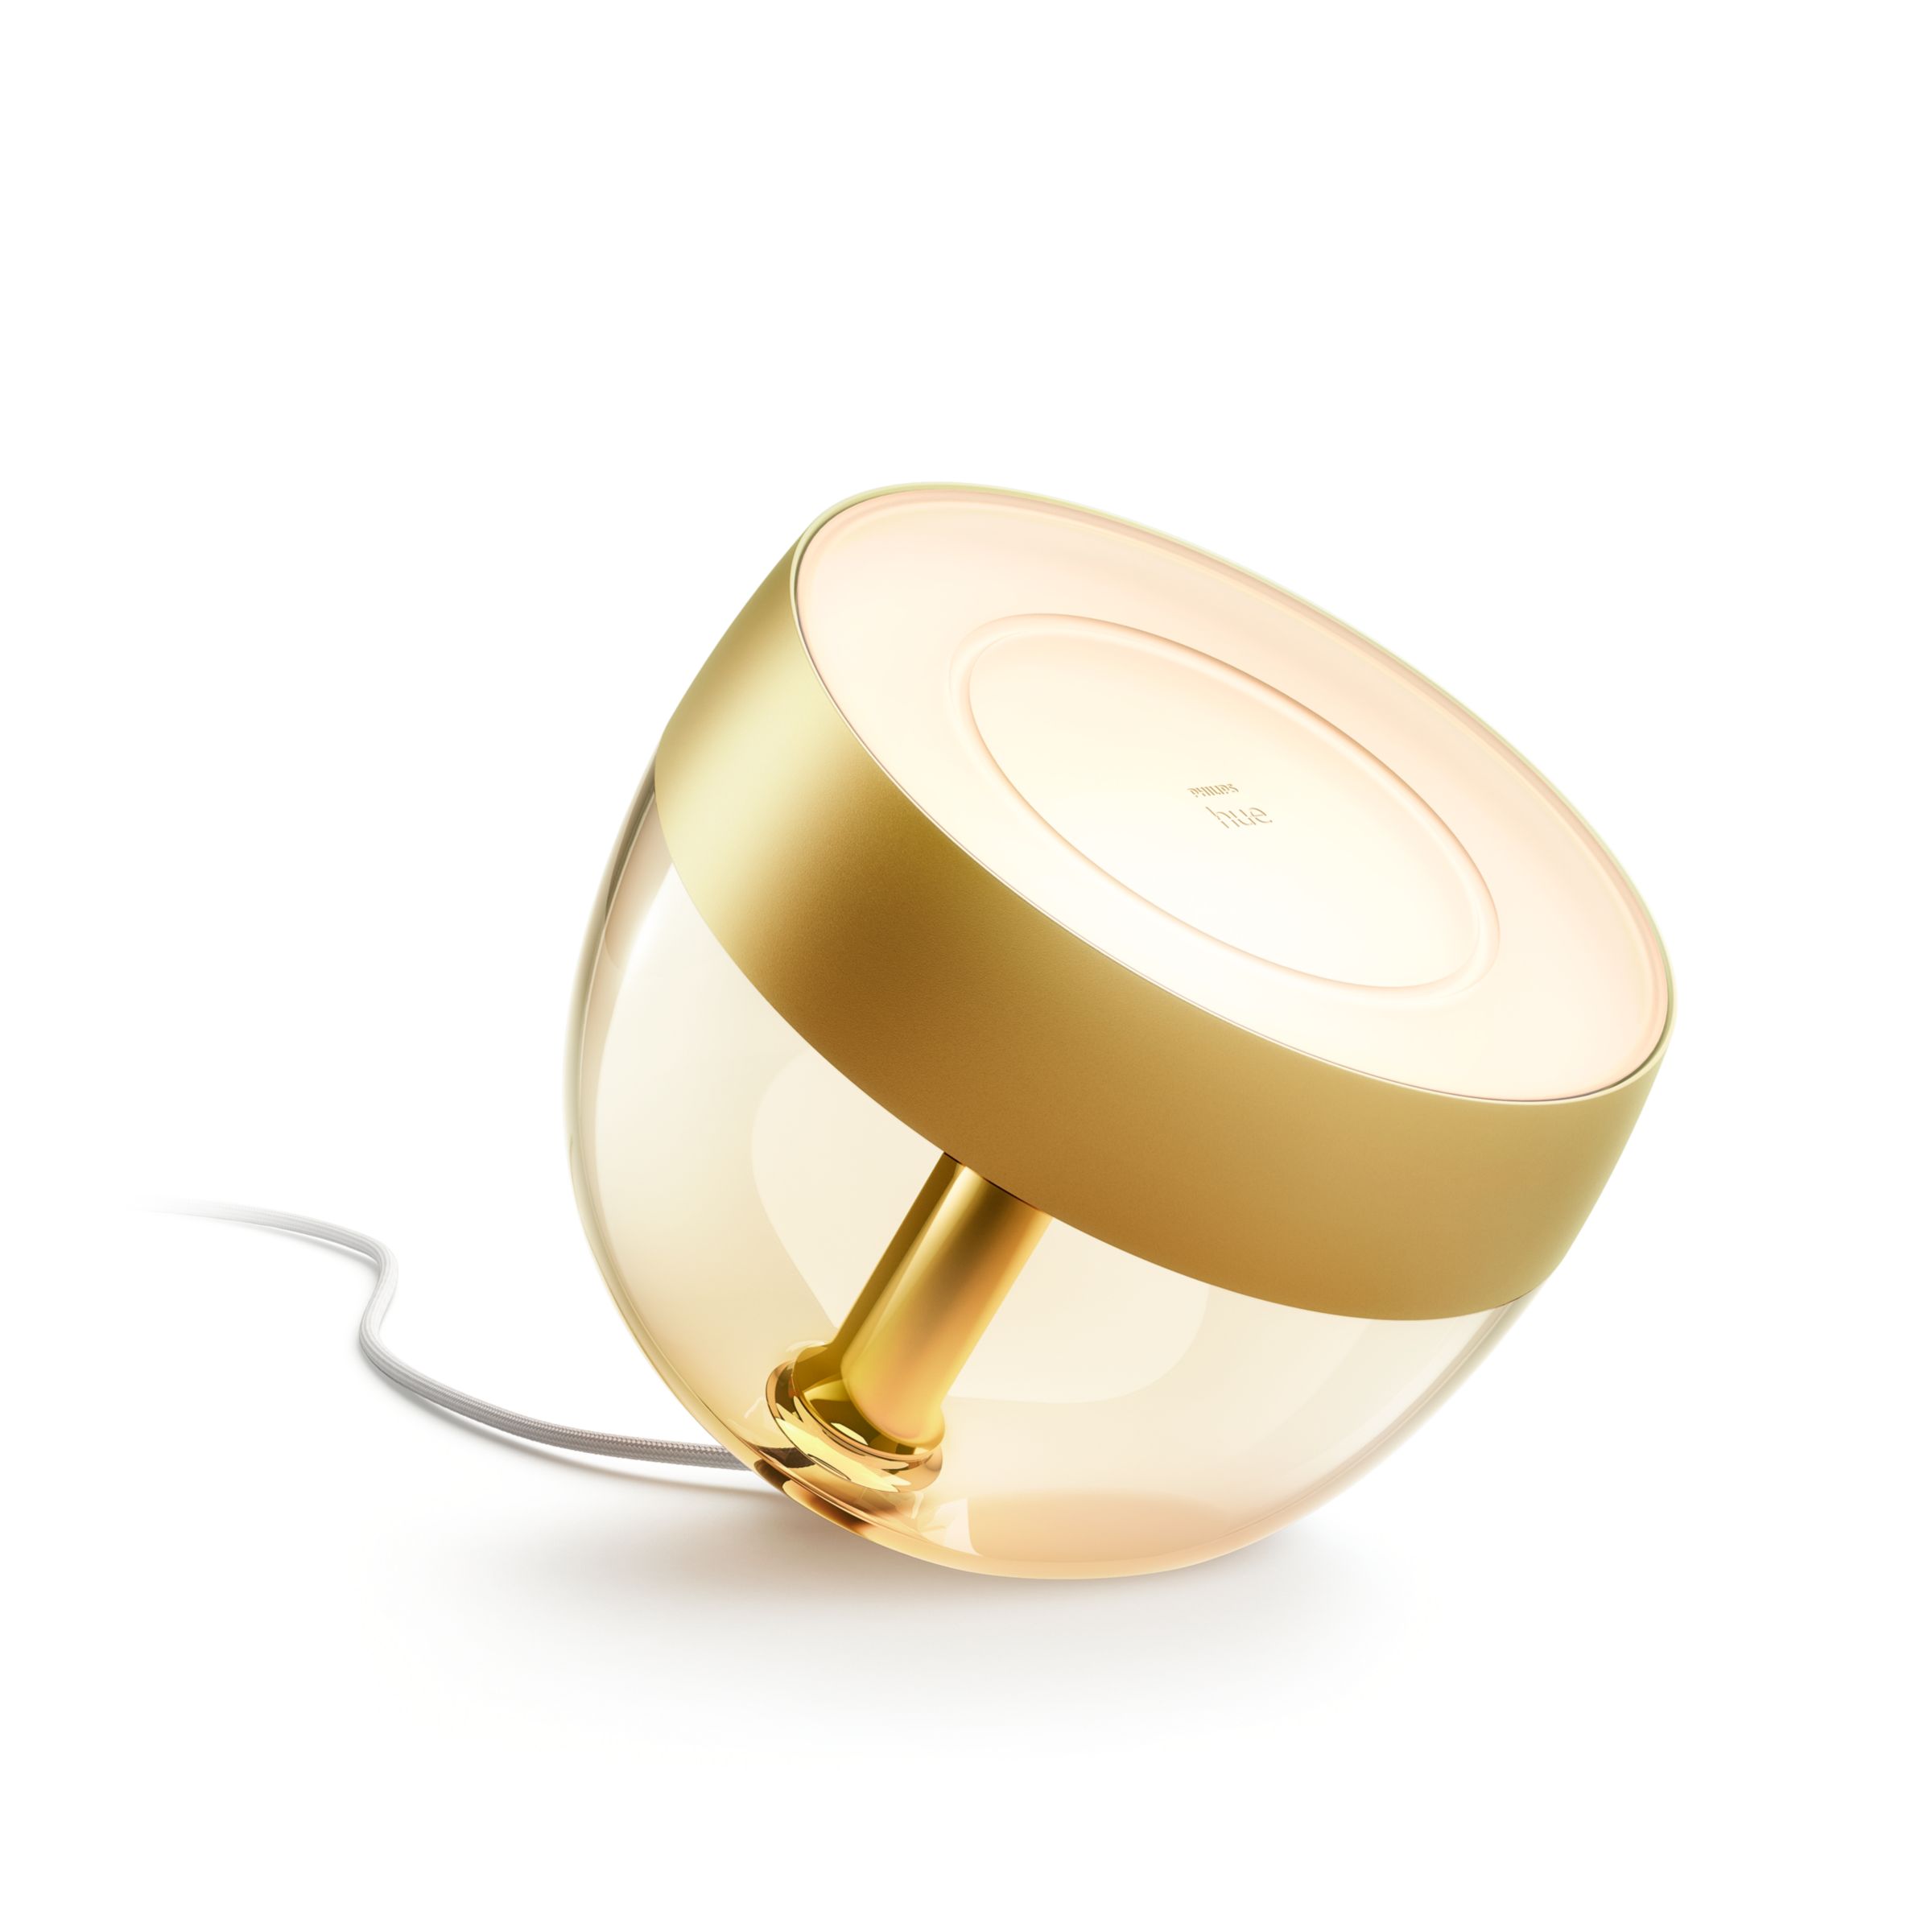 vooroordeel met de klok mee ontwerp Hue White and color ambiance Iris gold special edition | Philips Hue US